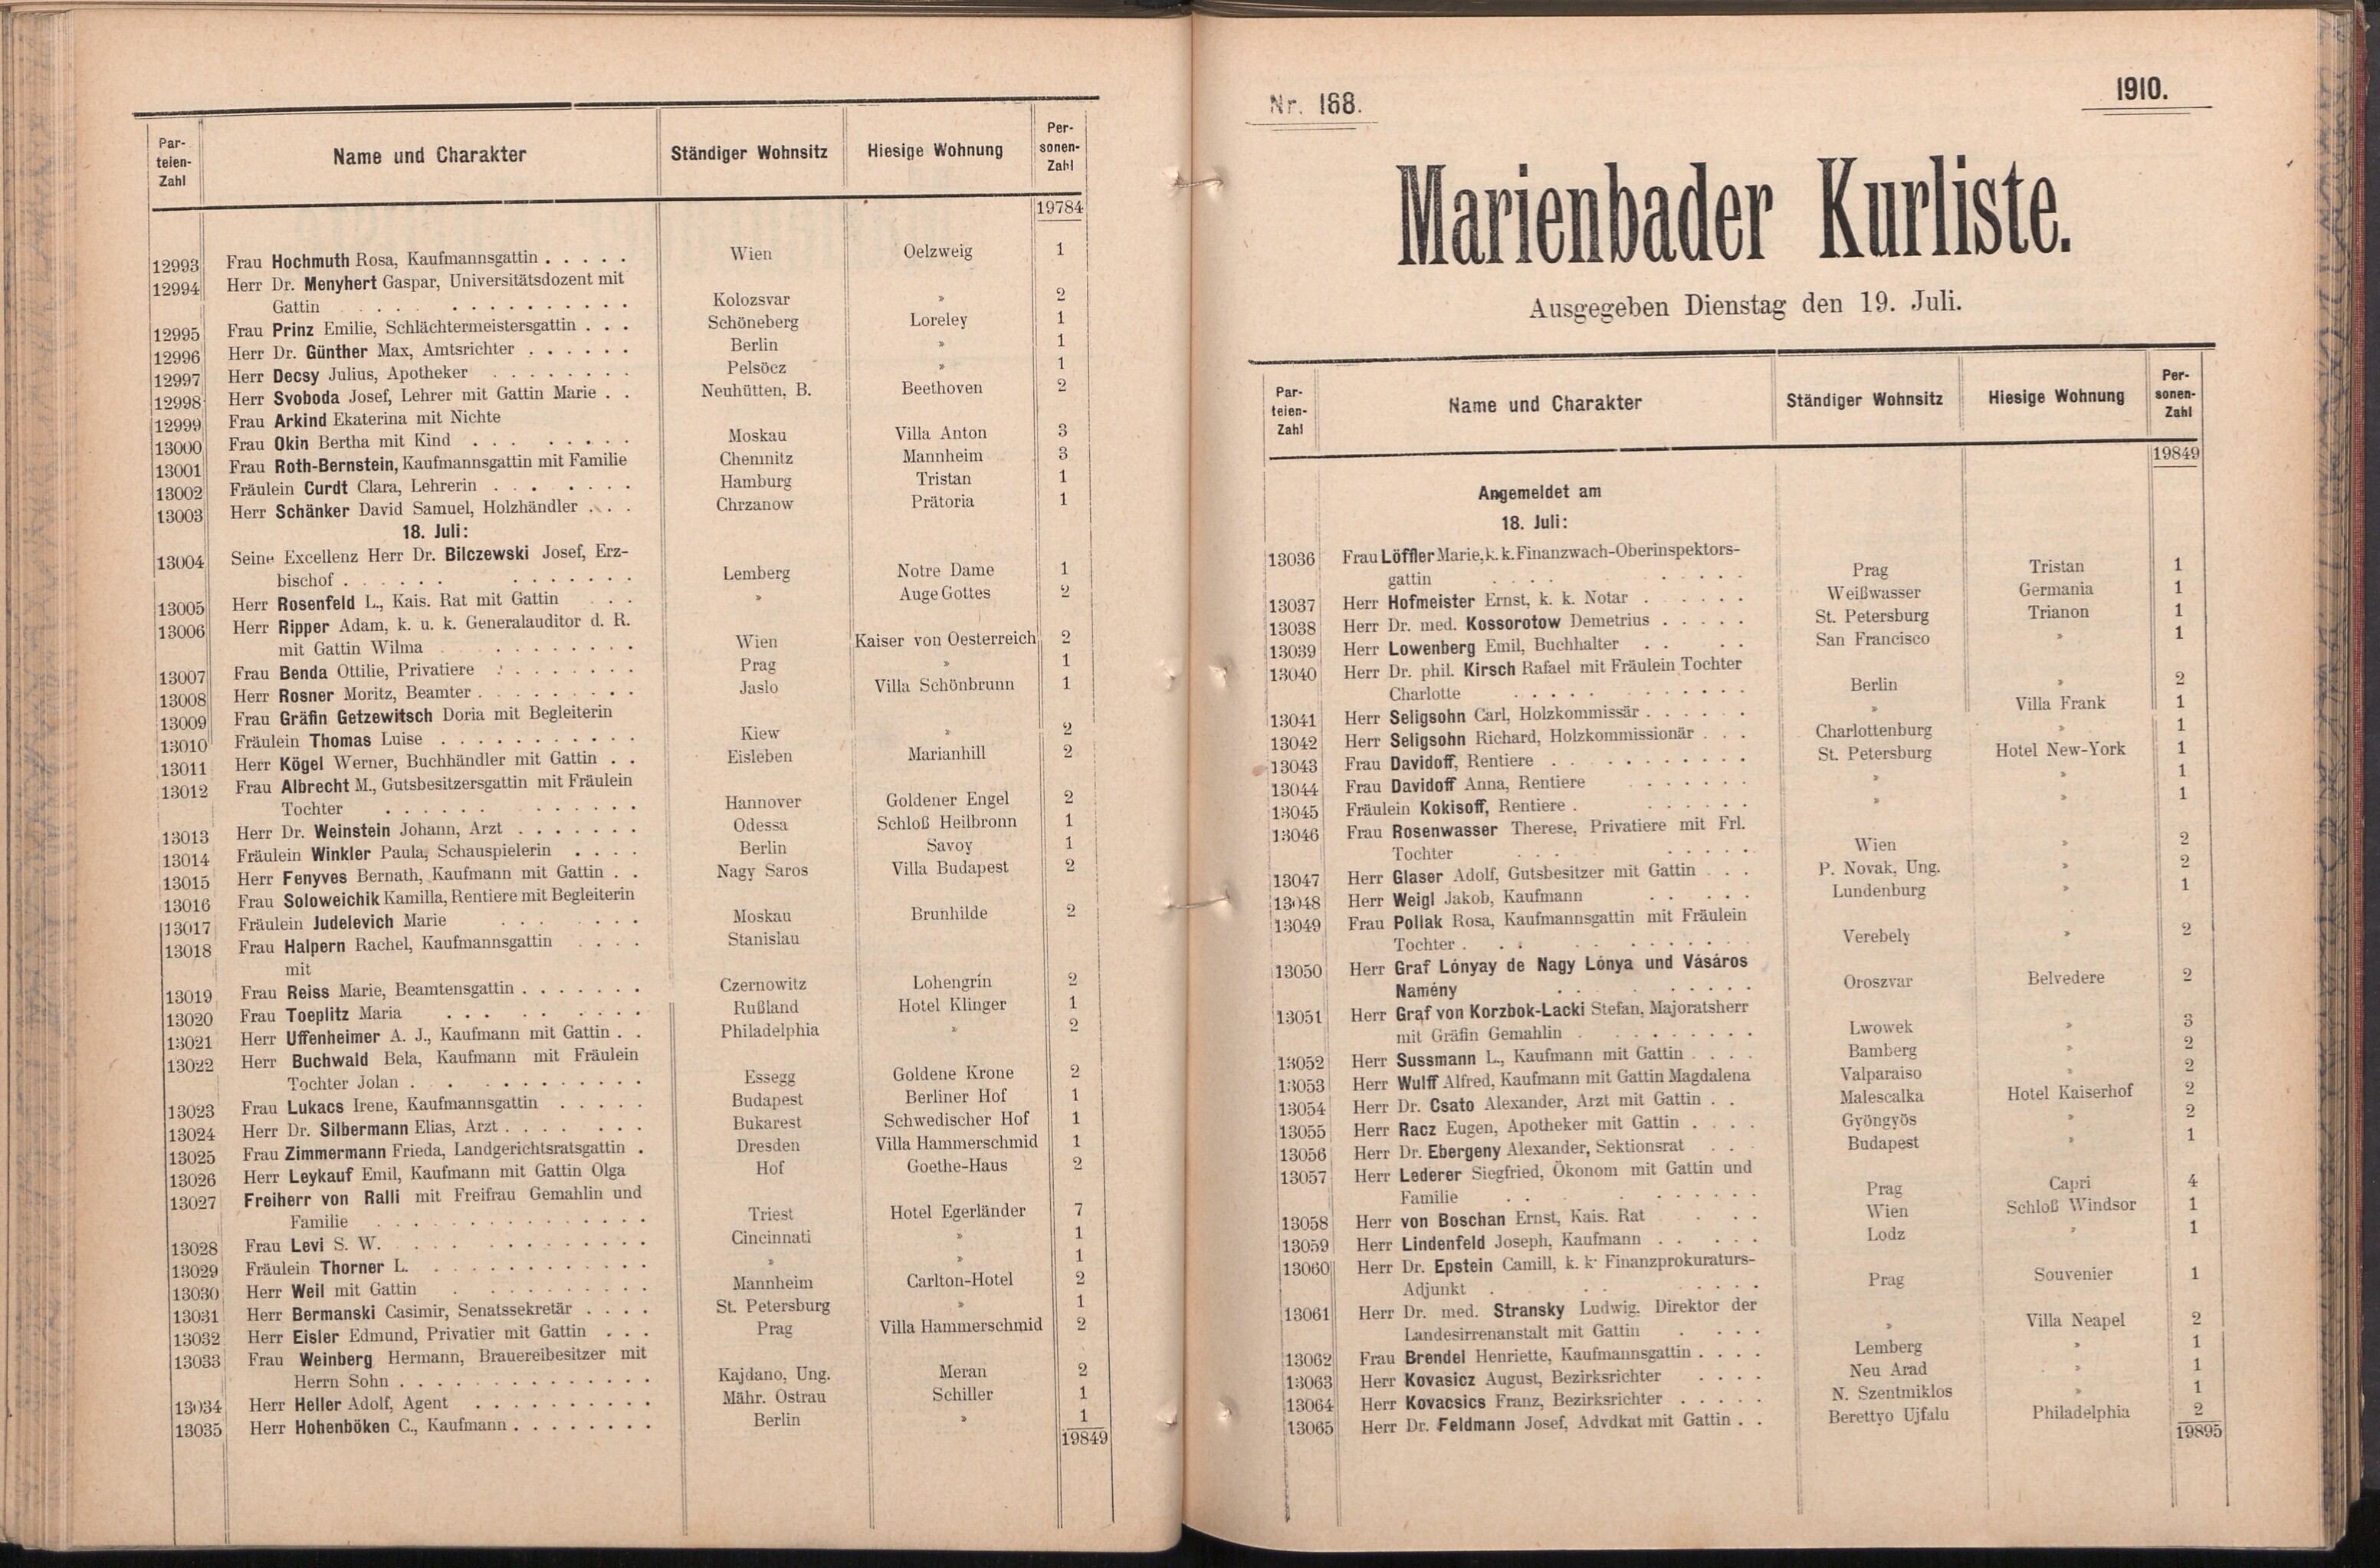 286. soap-ch_knihovna_marienbader-kurliste-1910_2860